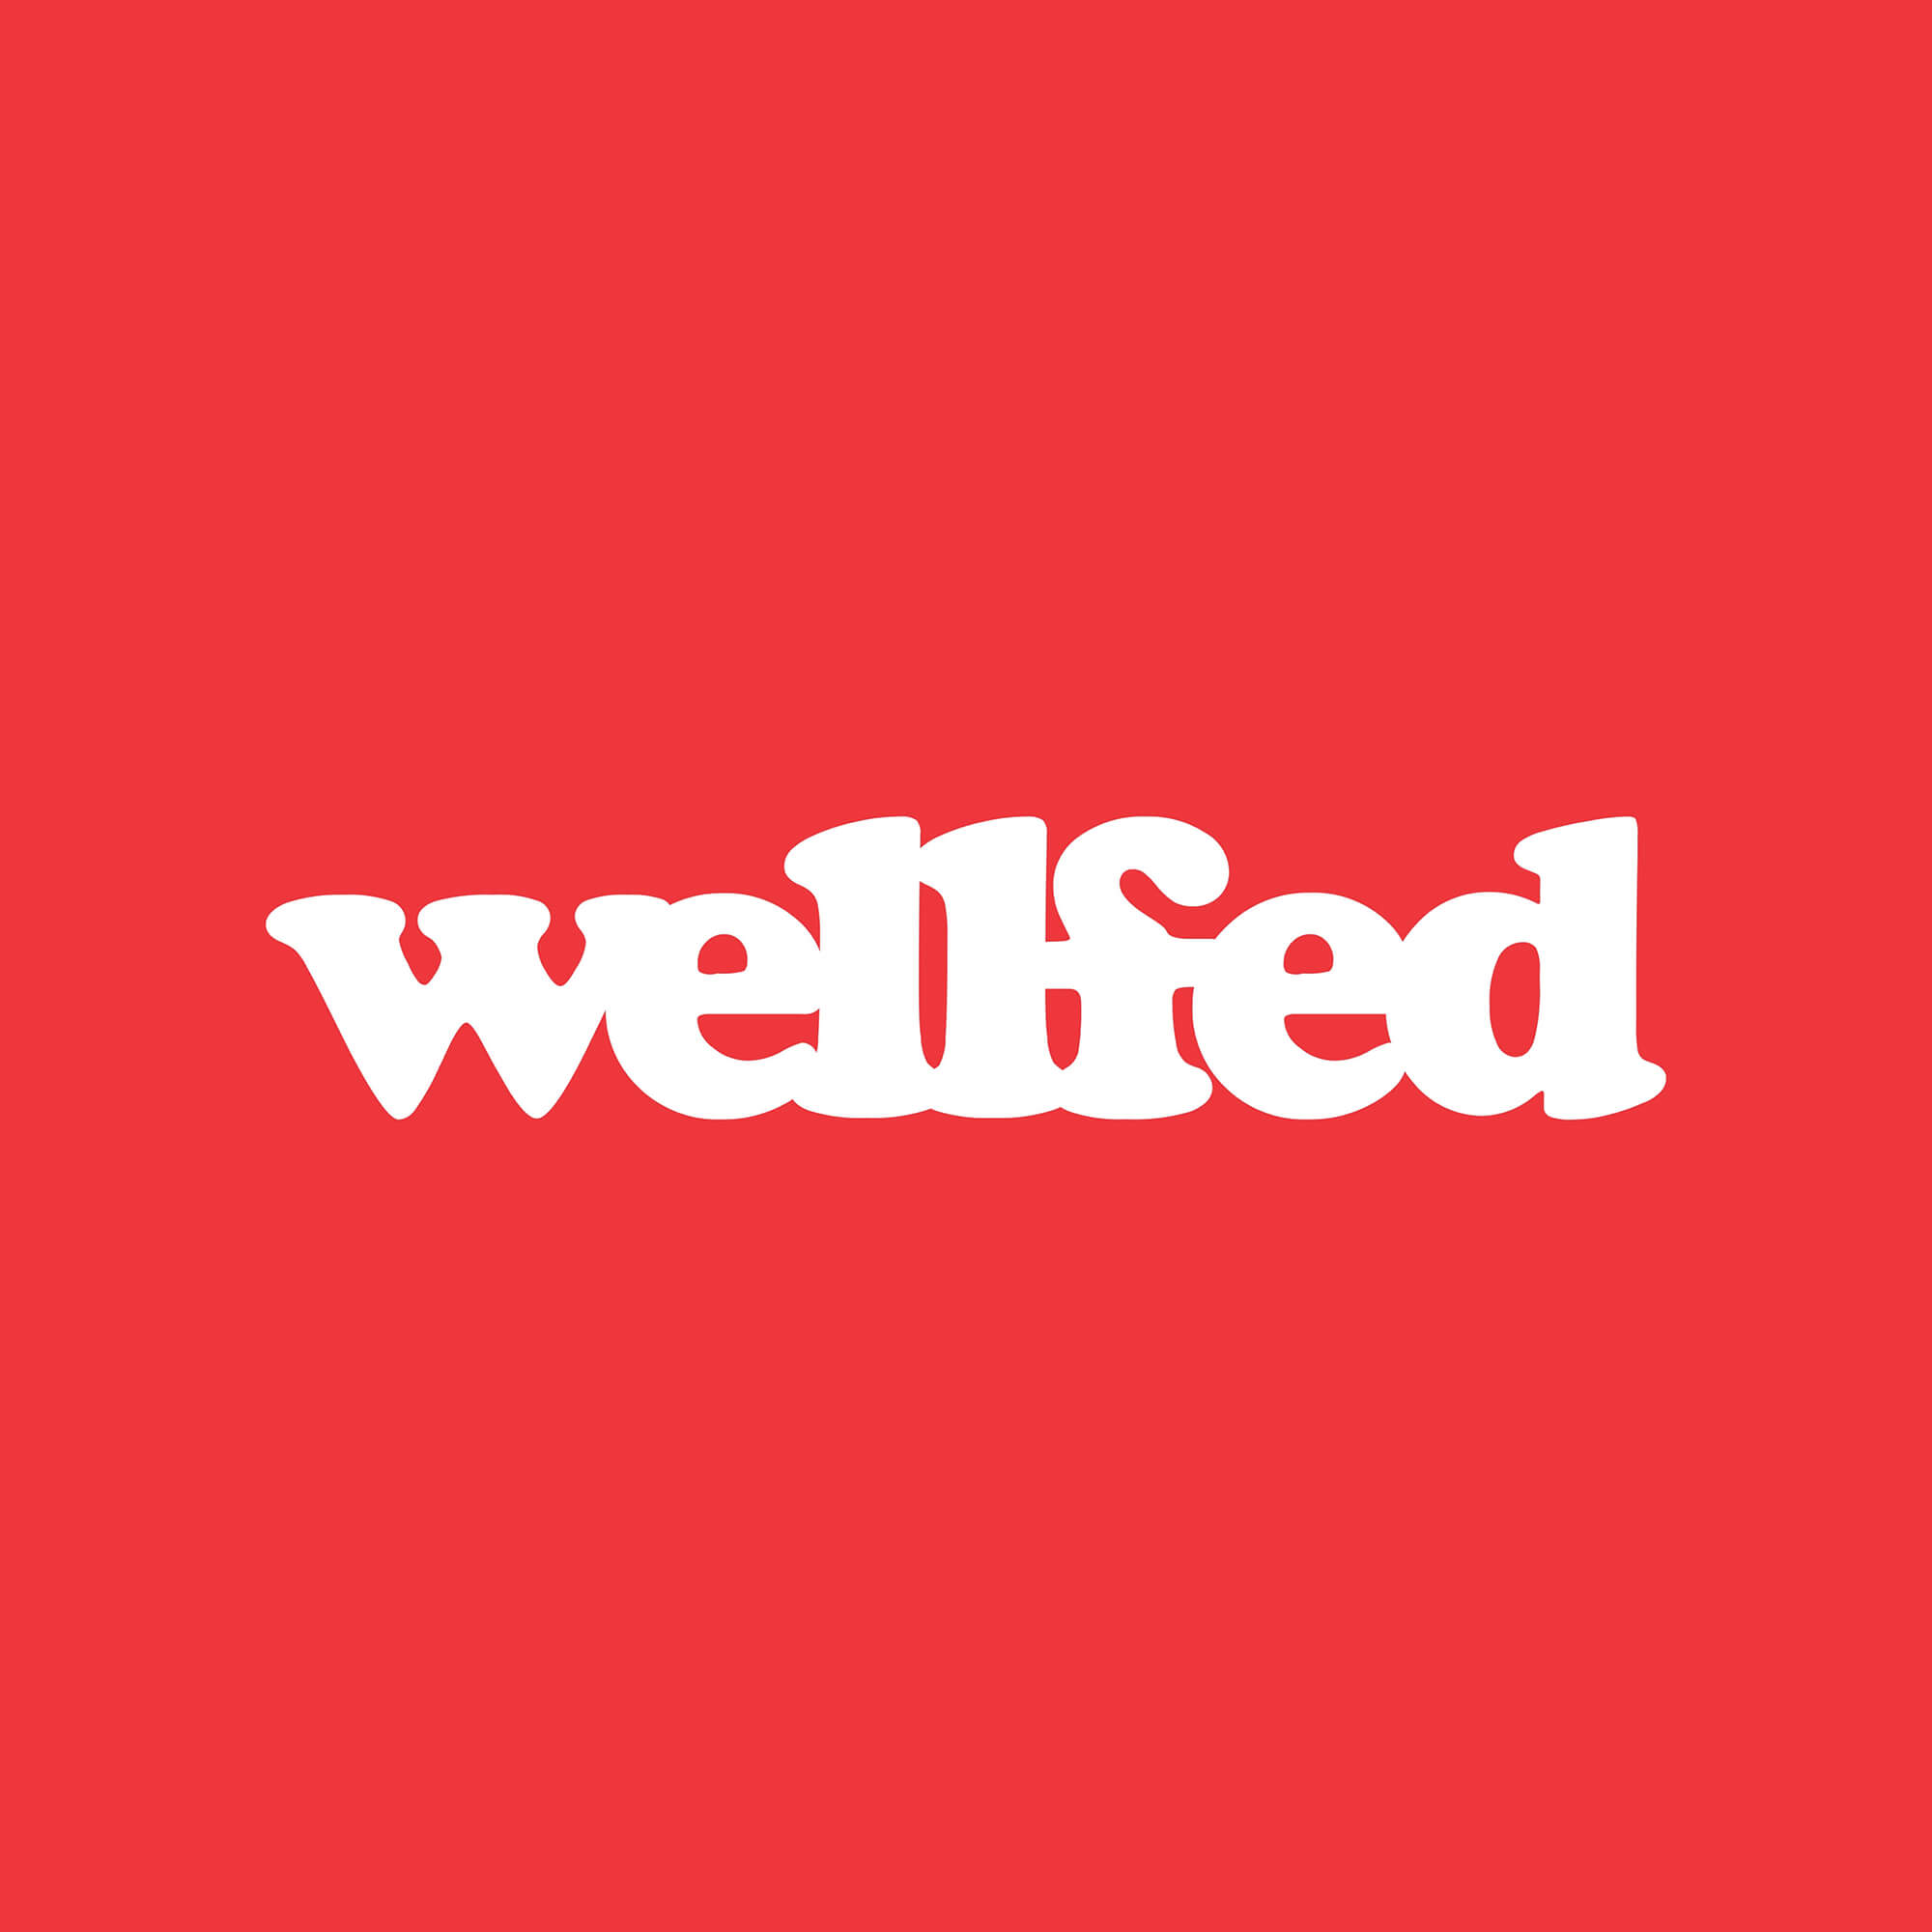 Wellfed Brand Design Logo Red